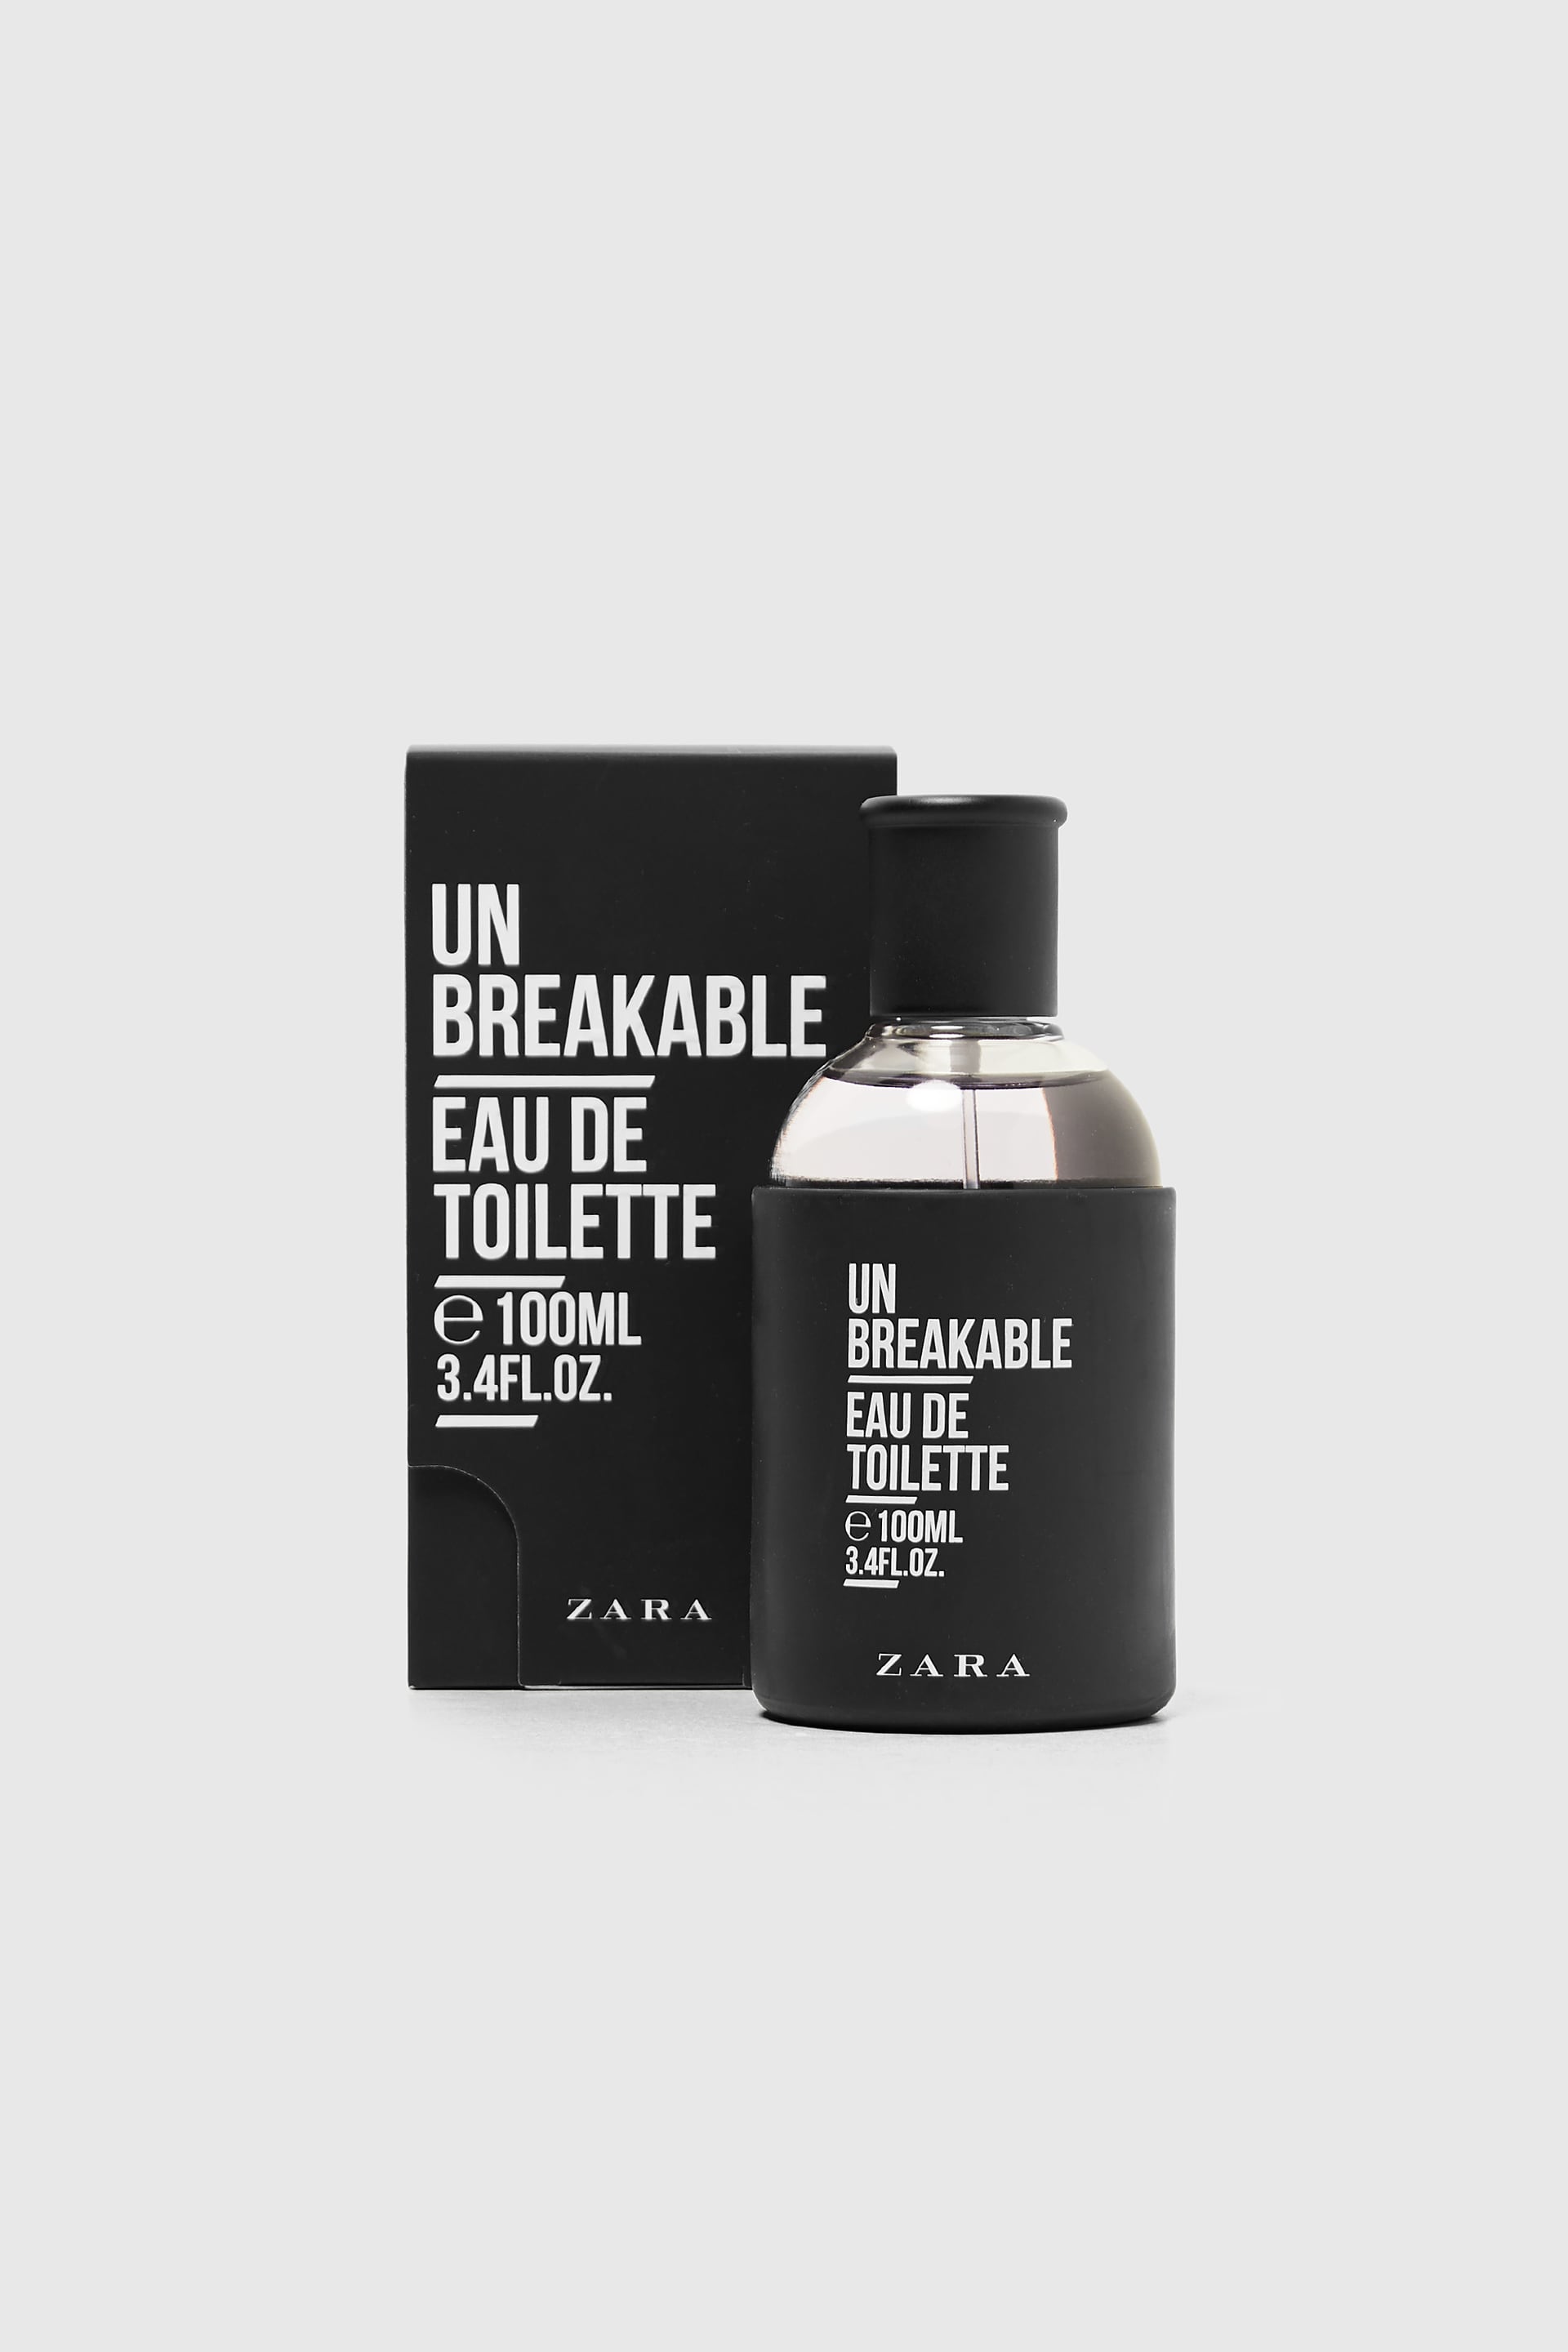 unbreakable zara perfume